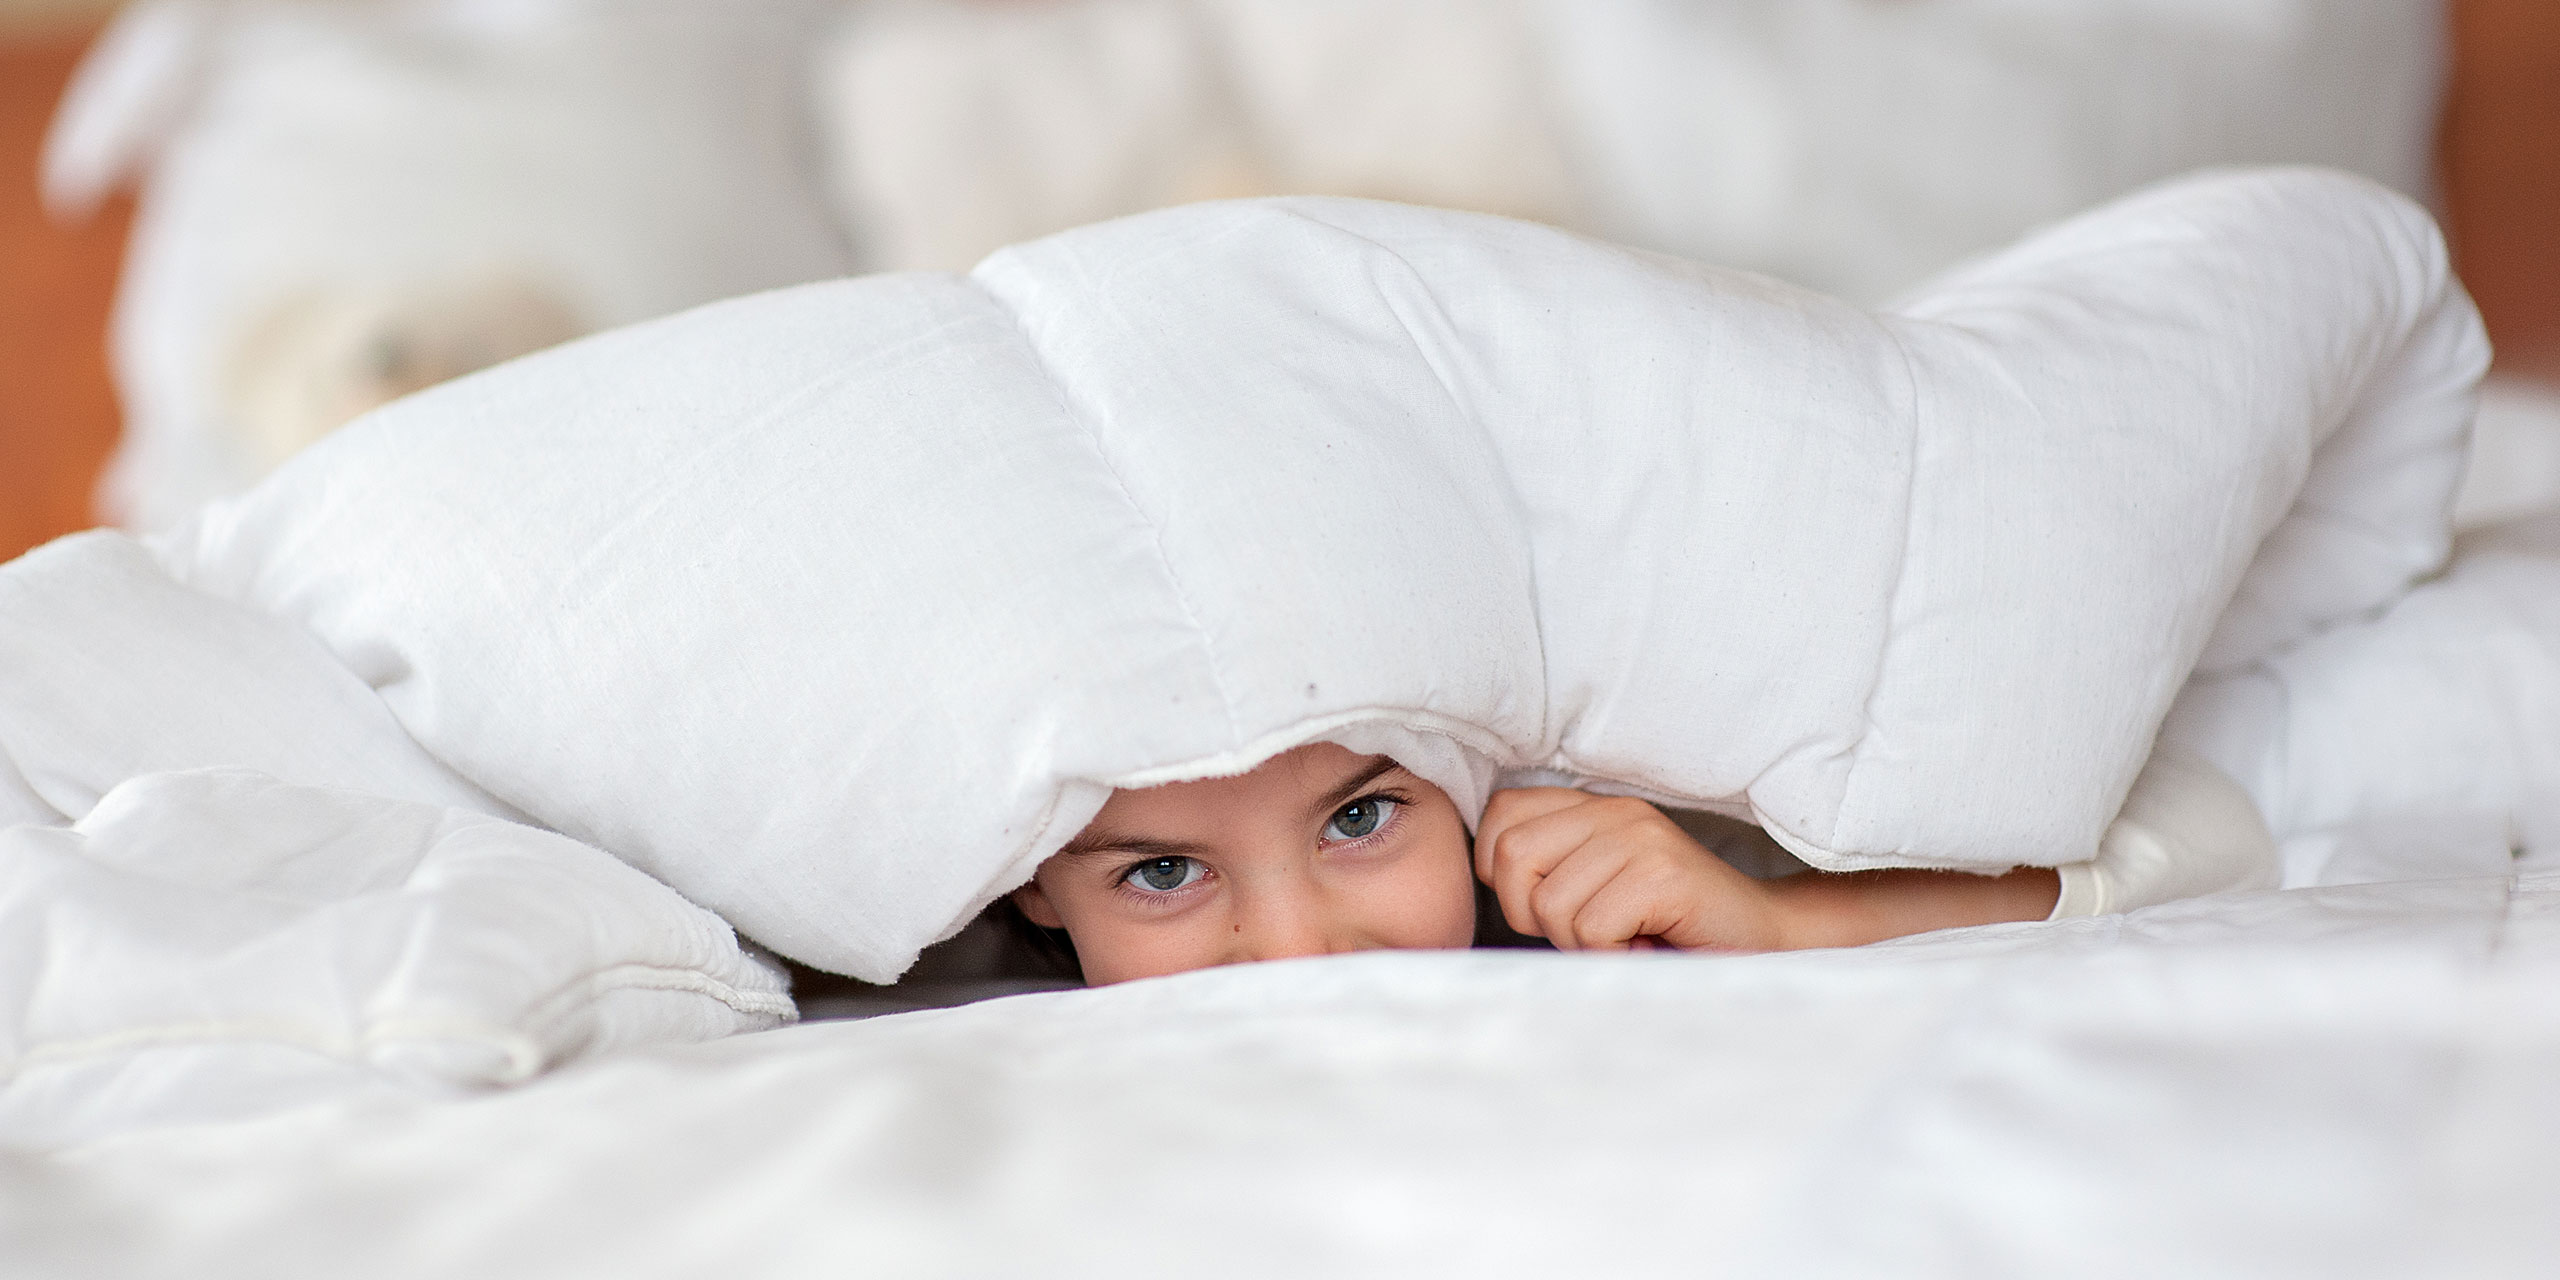 Little Girl in Hotel Bed; Courtesy of Lena Dyomina/Shutterstock.com